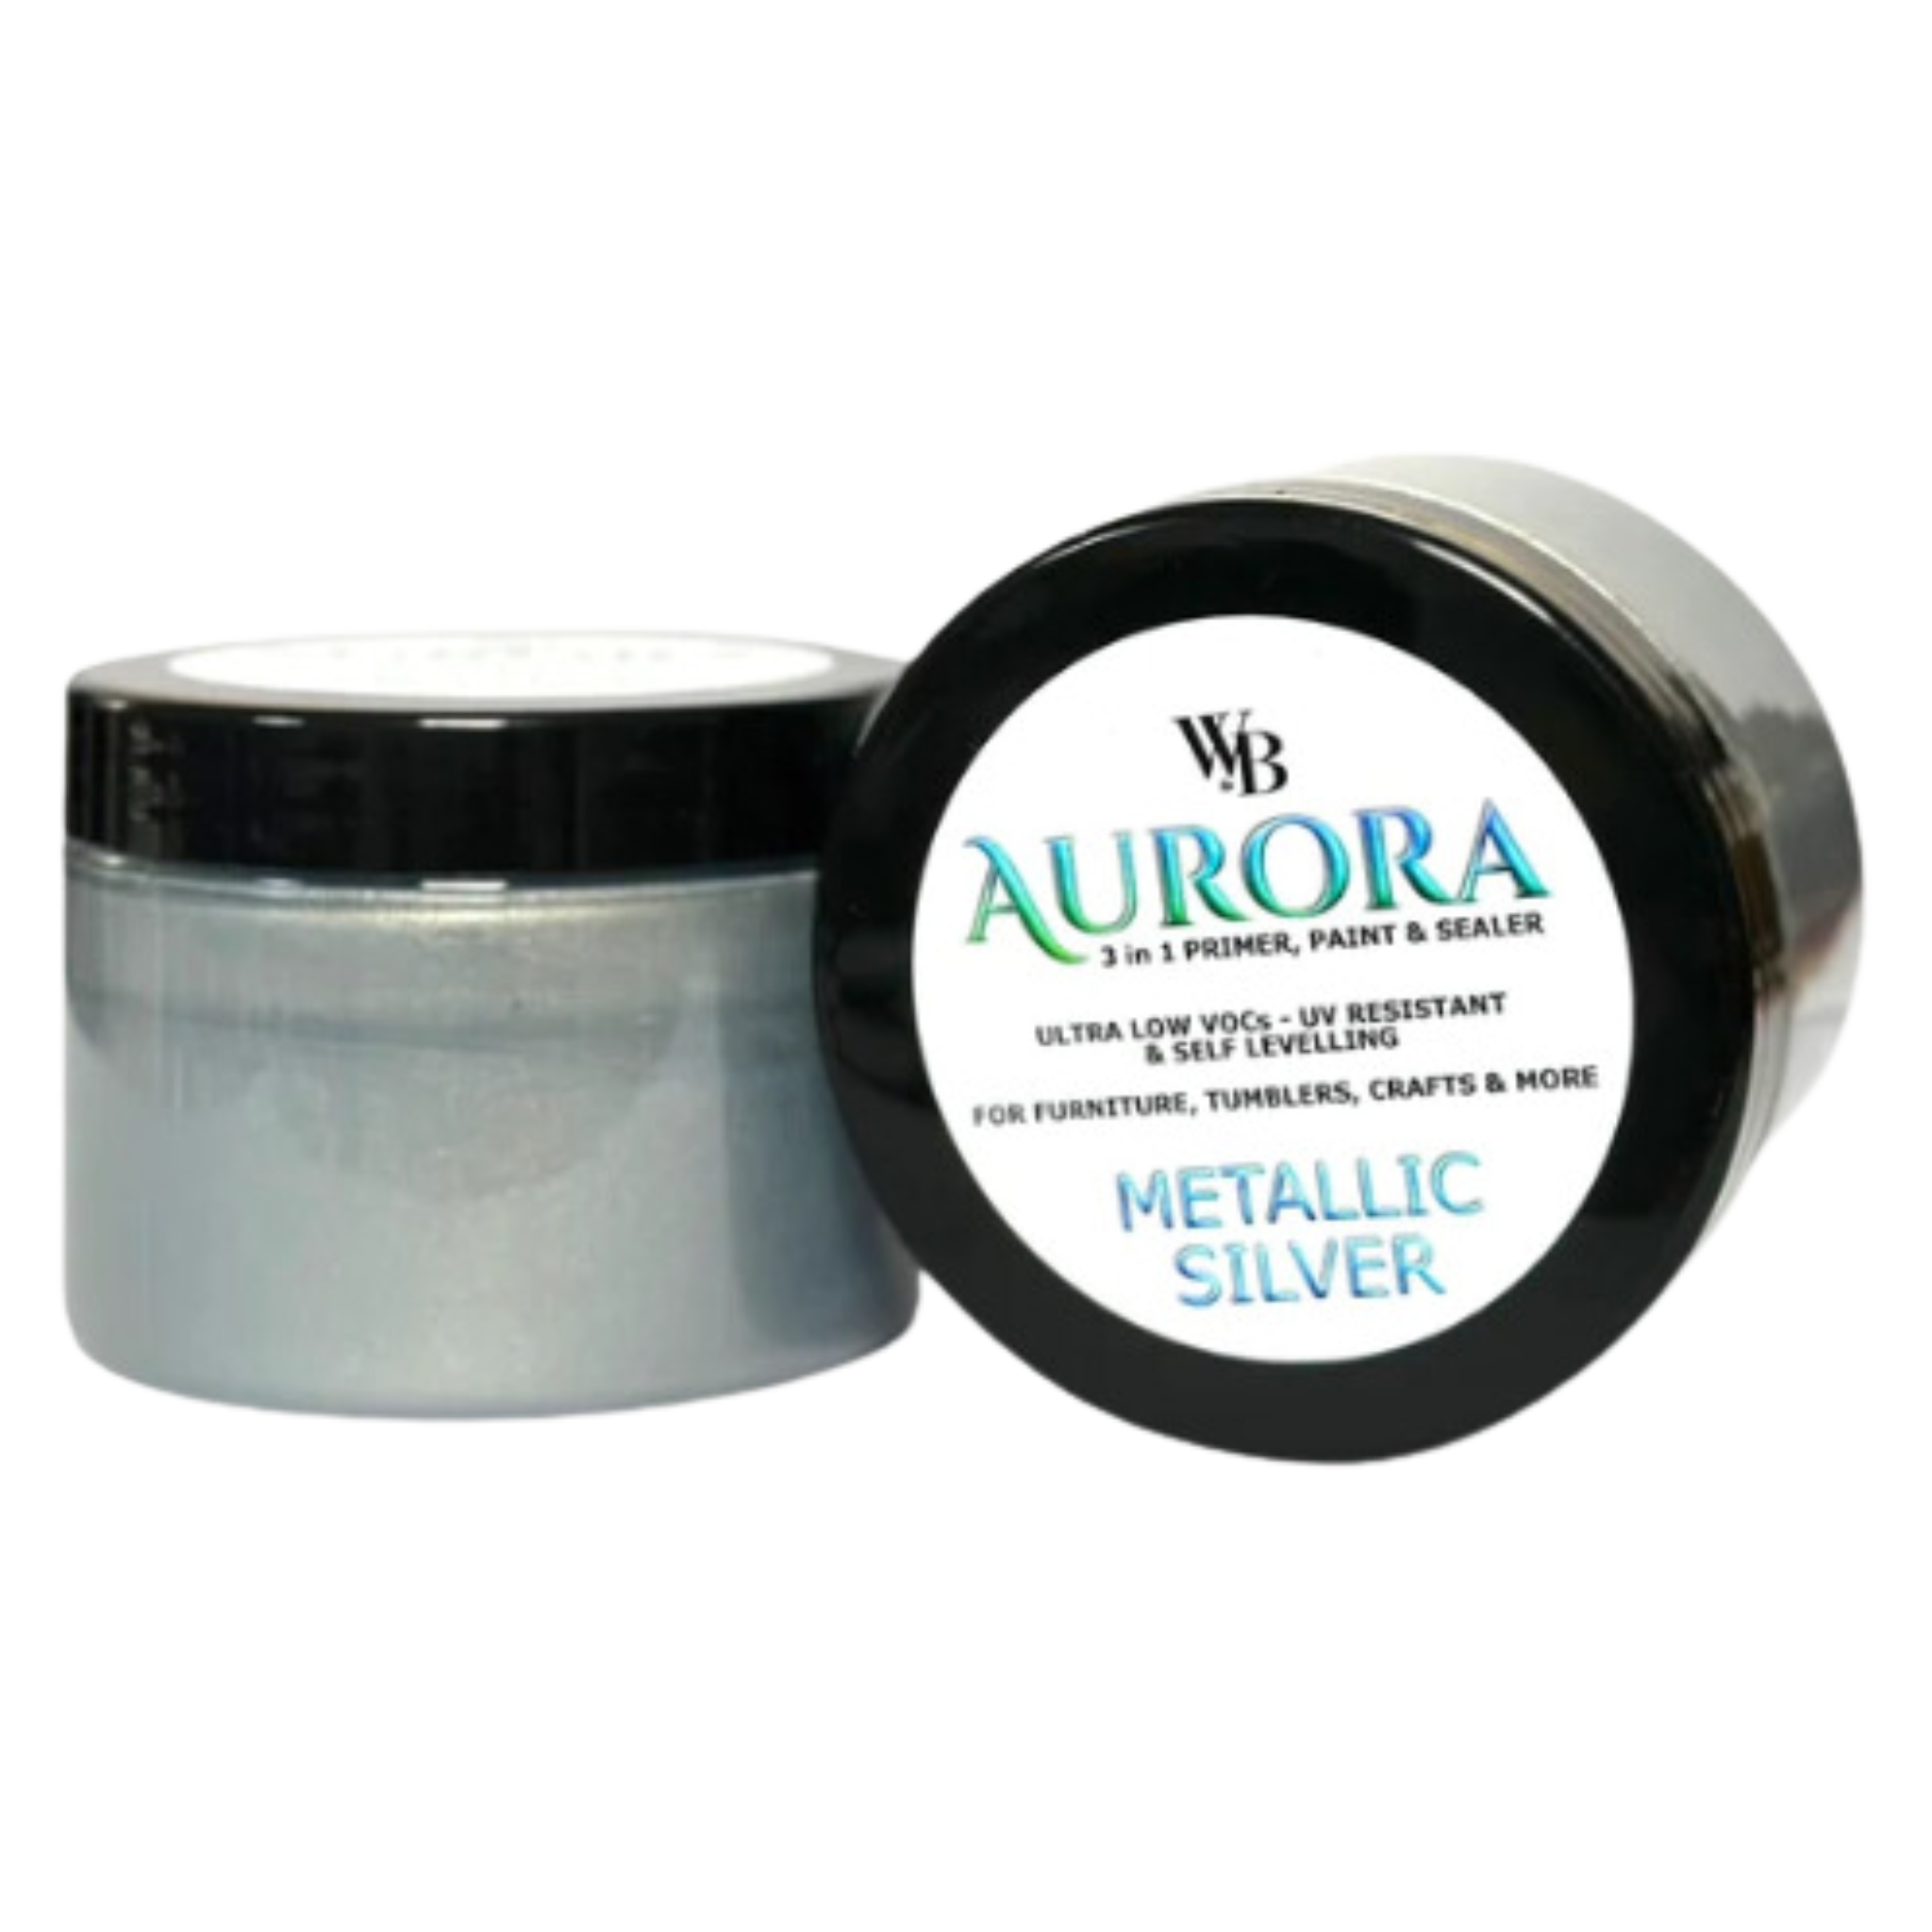 Aurora 3 in 1, Primer, Paint & Sealer